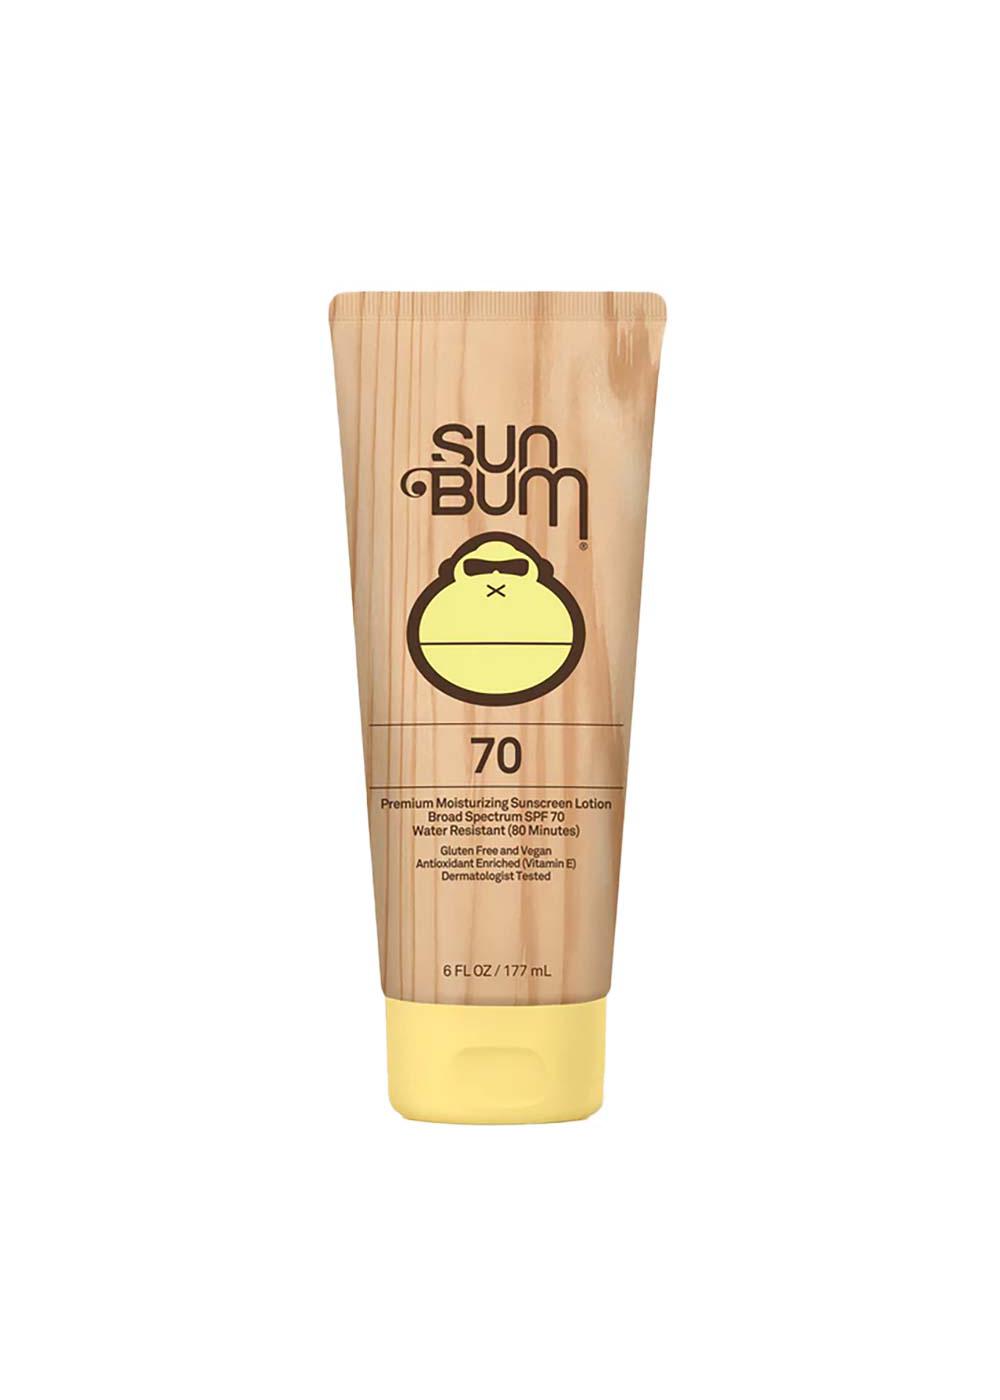 Sun Bum Moisterizing Sunscreen Lotion SPF 70; image 1 of 4